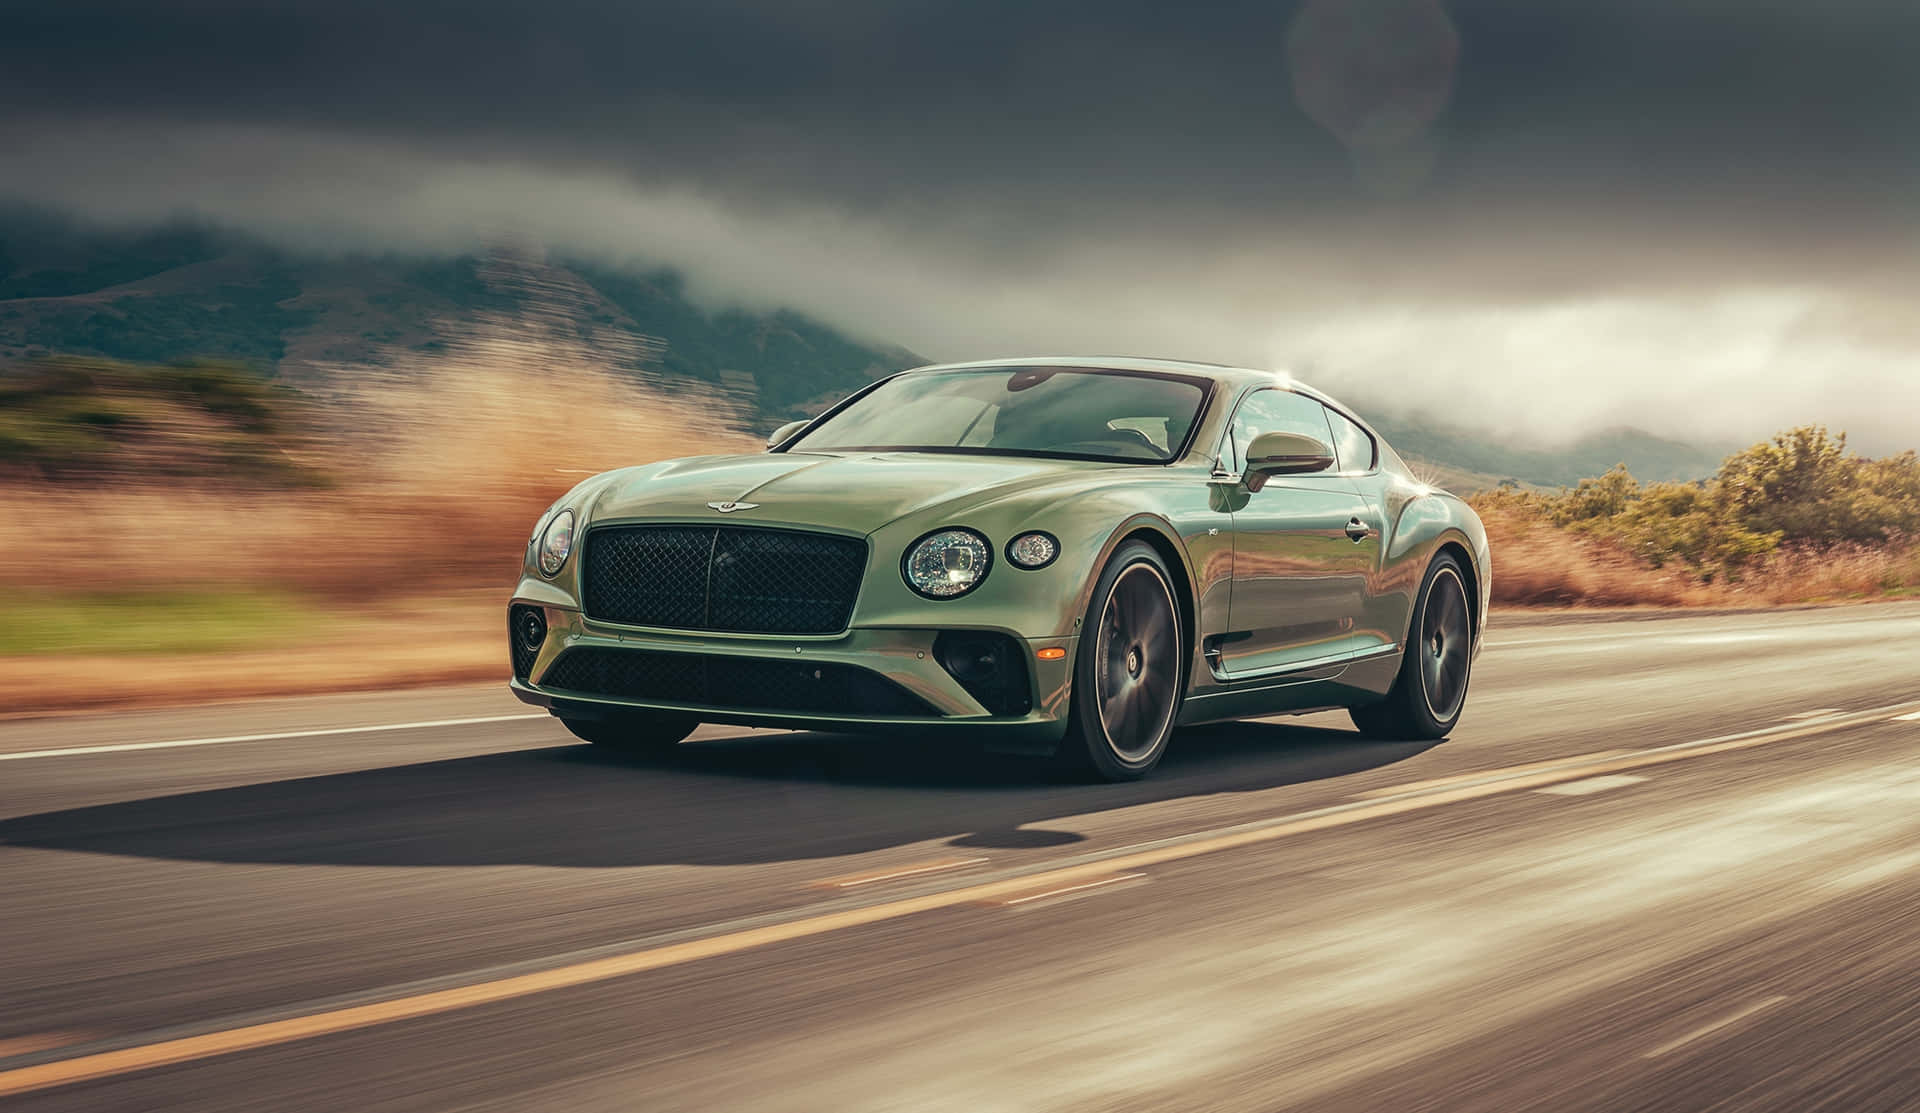 Race to the top in the Bentley Sport Wallpaper